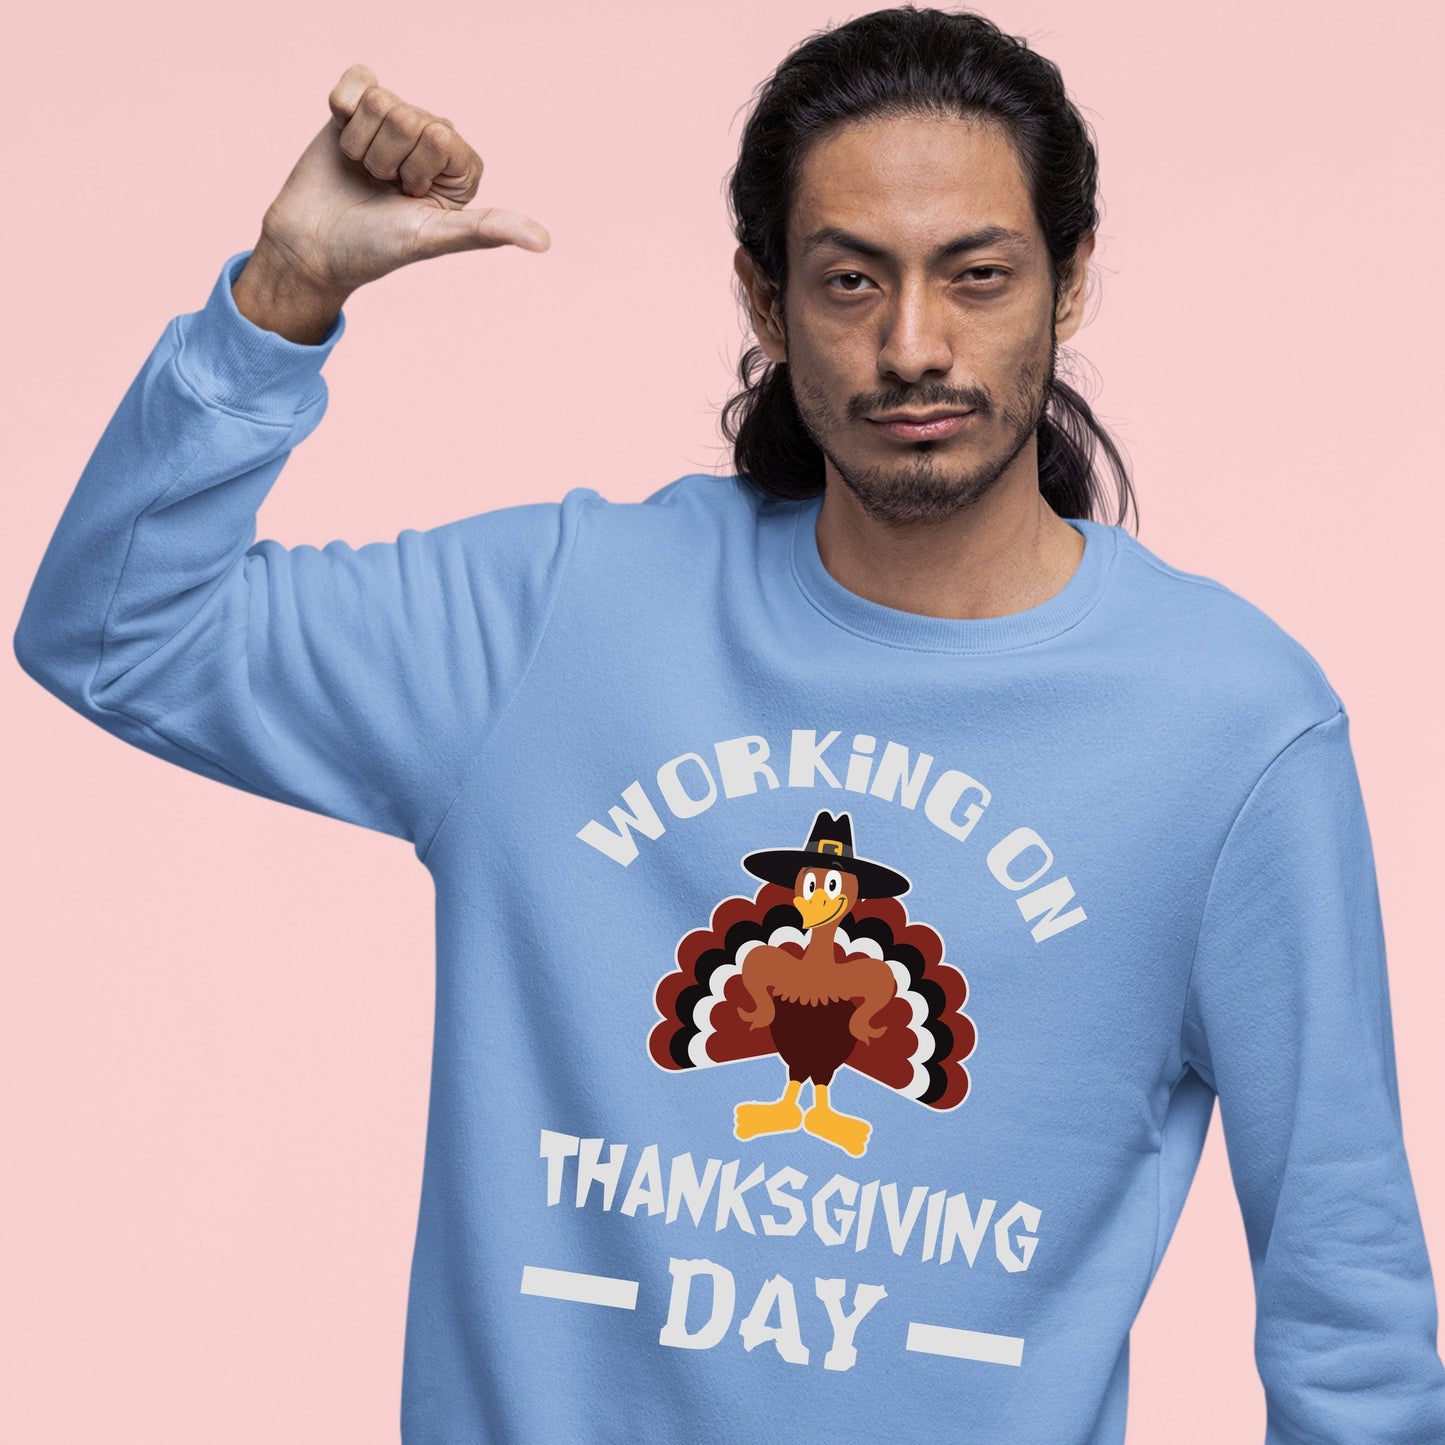 Thanksgiving Working on Thanksgiving Sweatshirt, Thanksgiving Sweatshirt, Thanksgiving Sweater for Men, Thanksgiving Sweater for Women